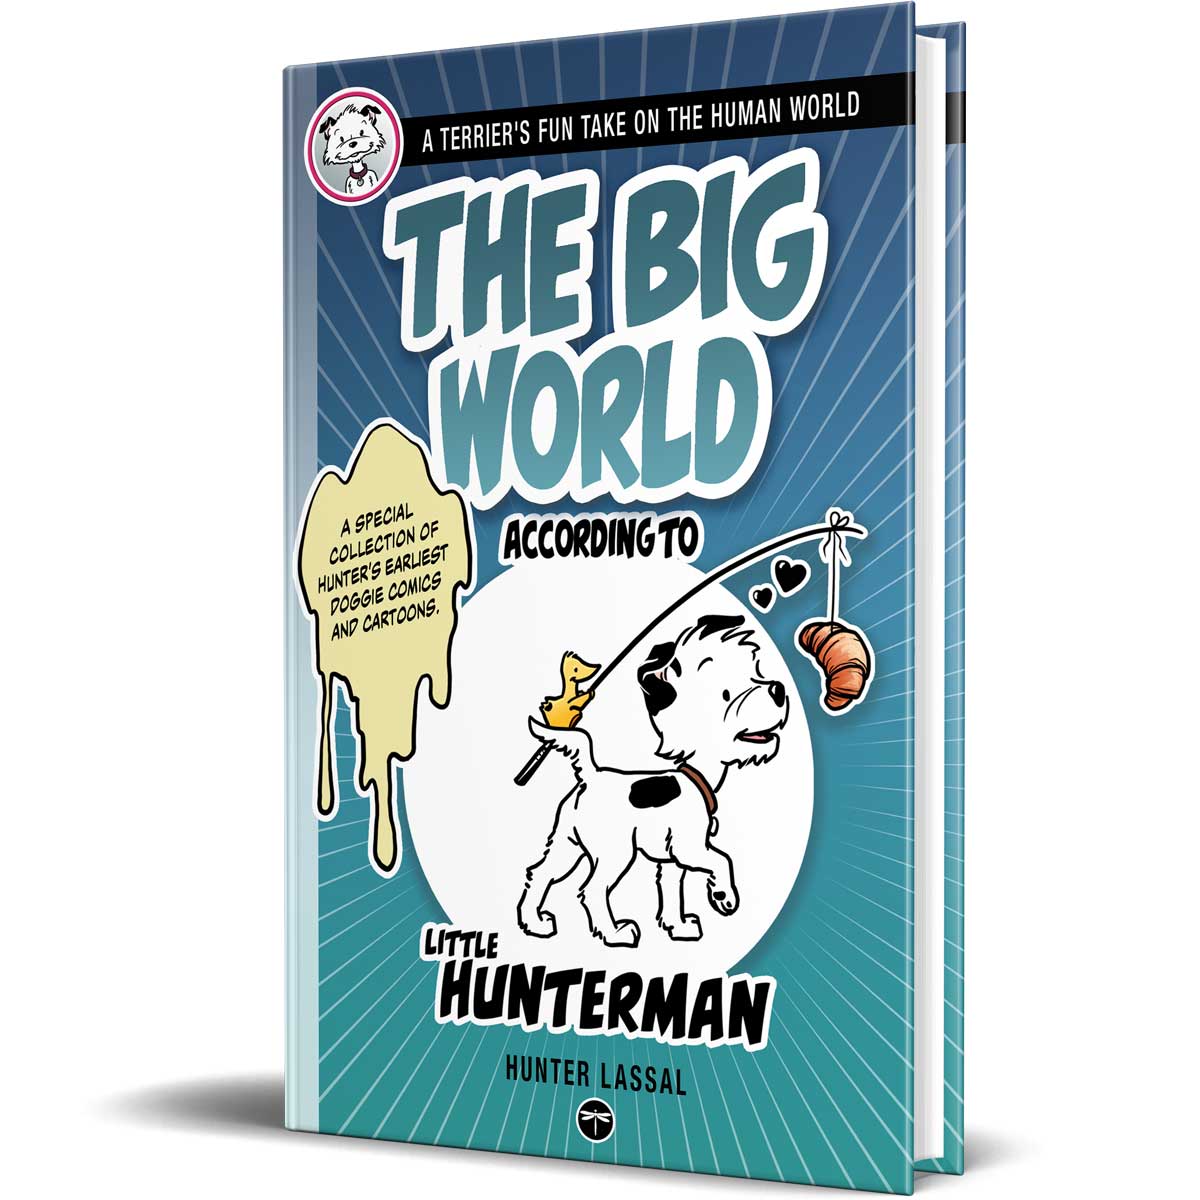 The Big World According to Little Hunterman 8.5x5.5 Hardcover